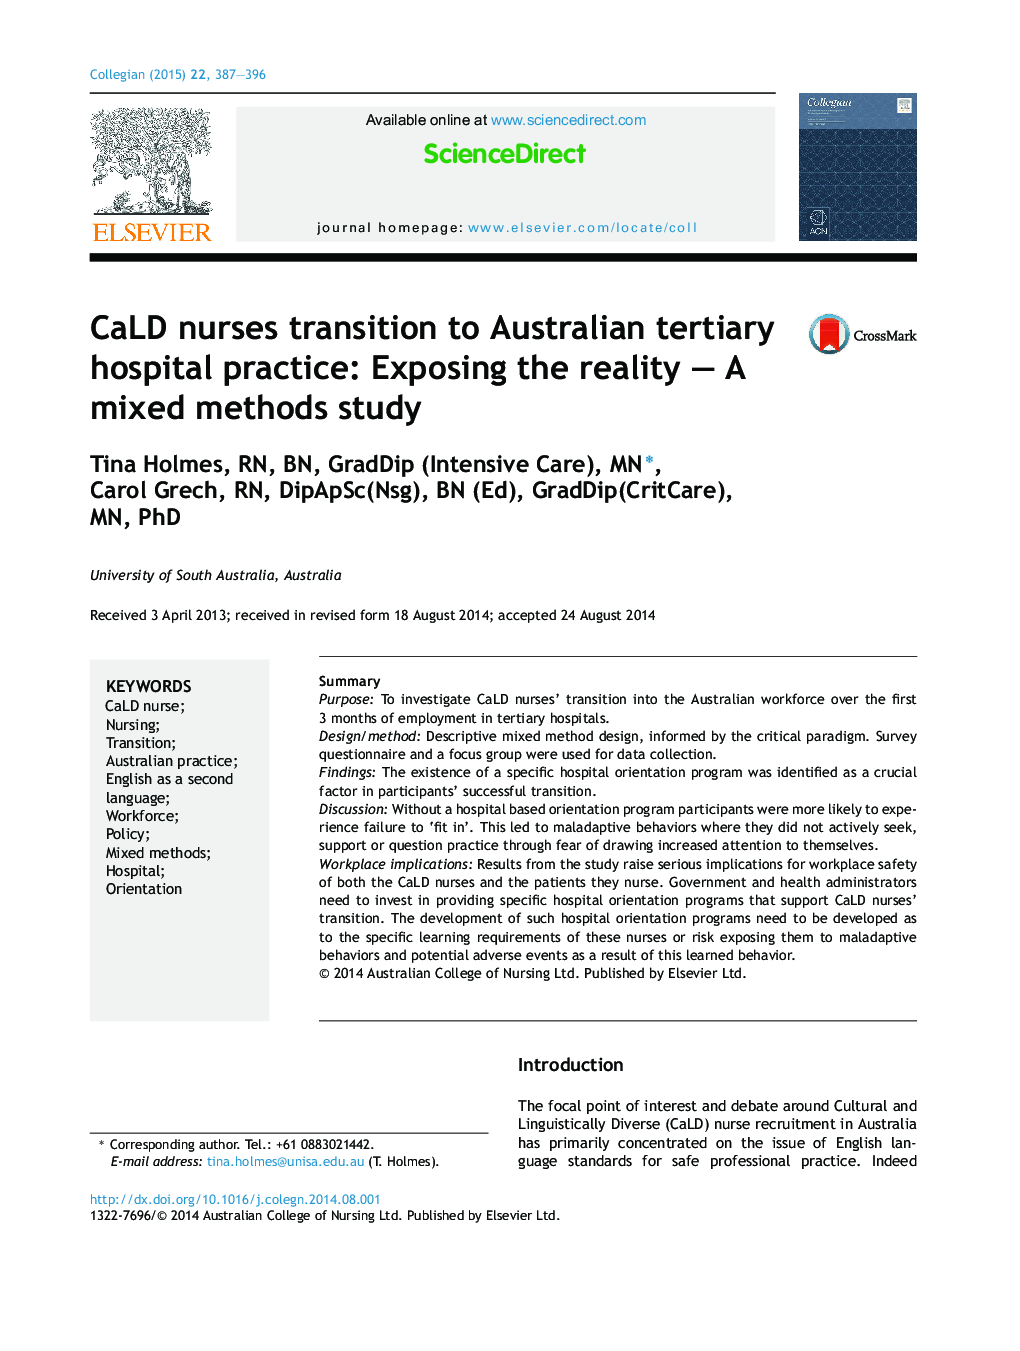 CaLD nurses transition to Australian tertiary hospital practice: Exposing the reality - A mixed methods study